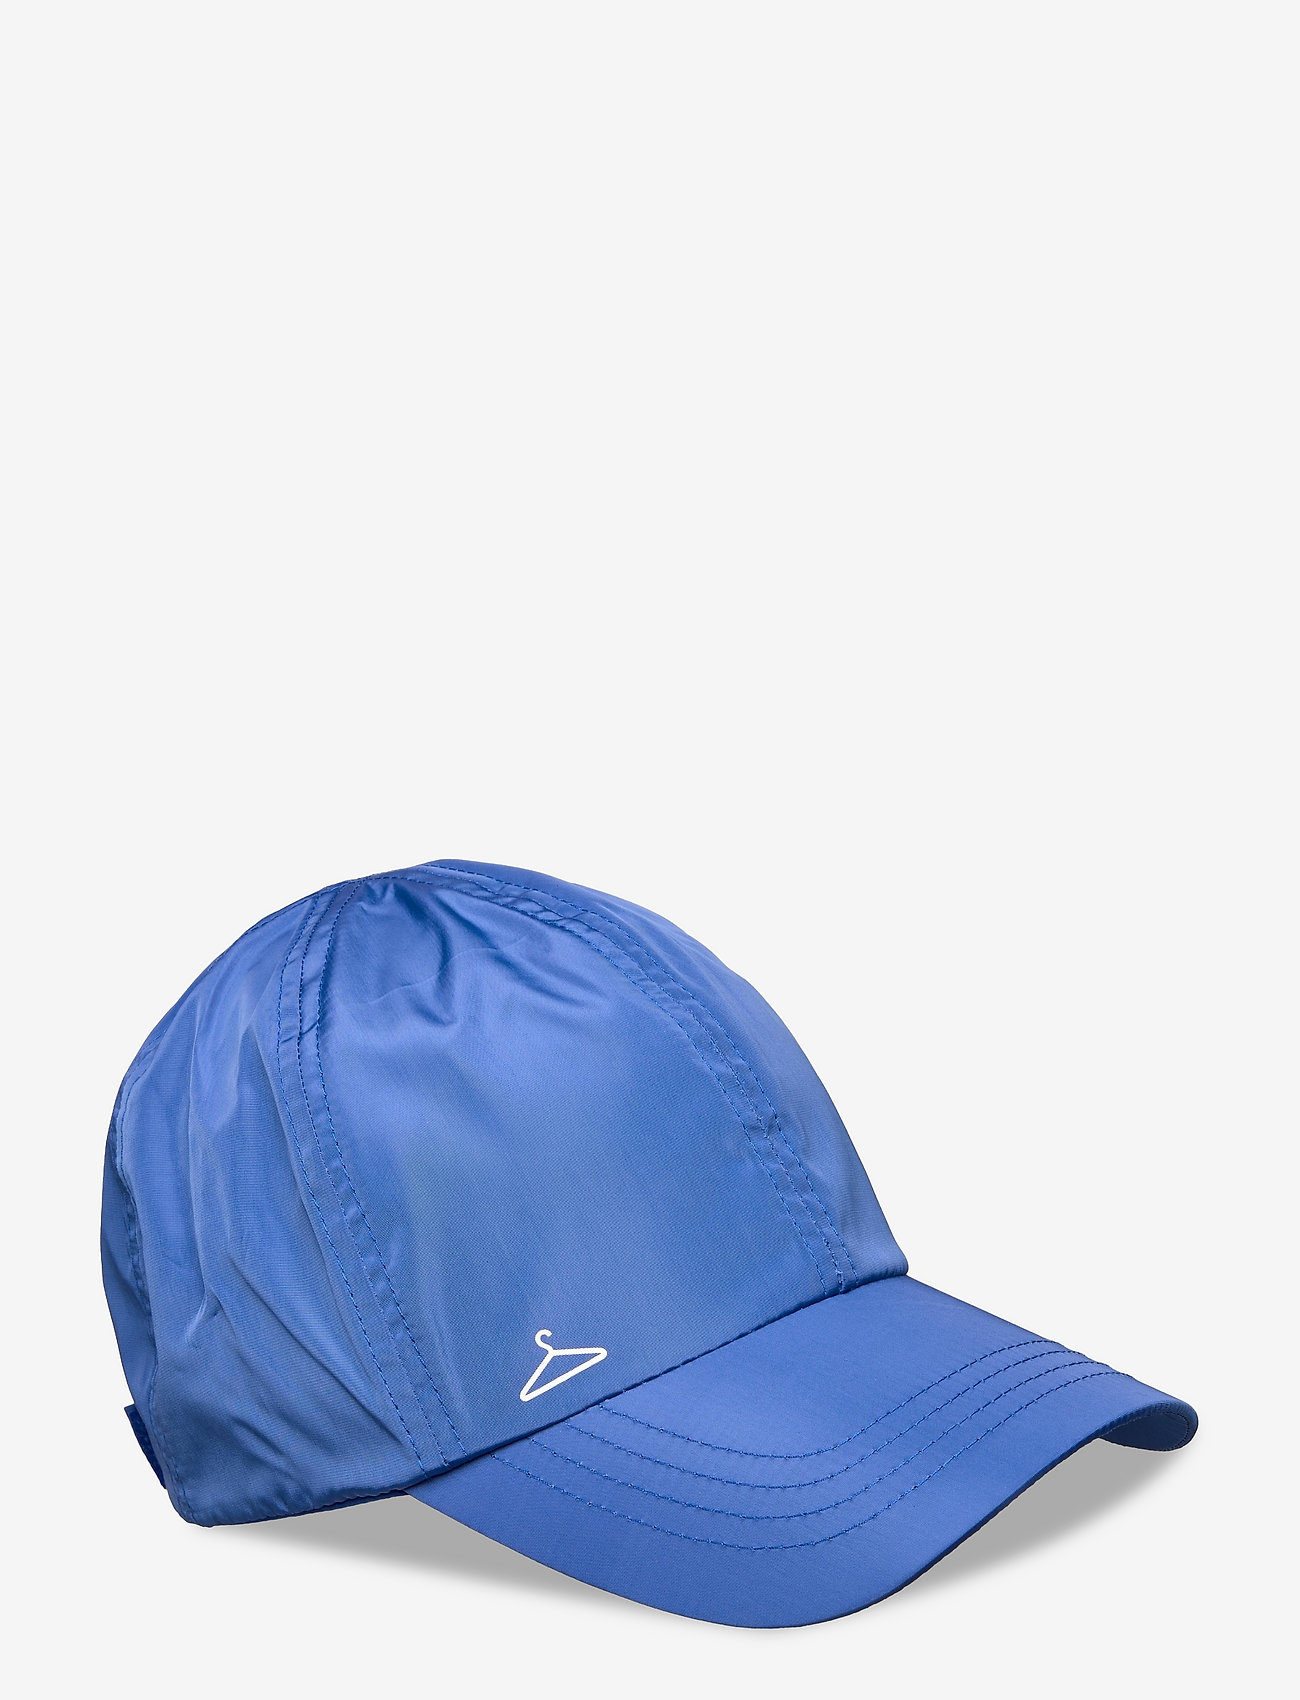 Hanger by Holzweiler - Hanger Caps - kepurės su snapeliu - blue 4056 - 0